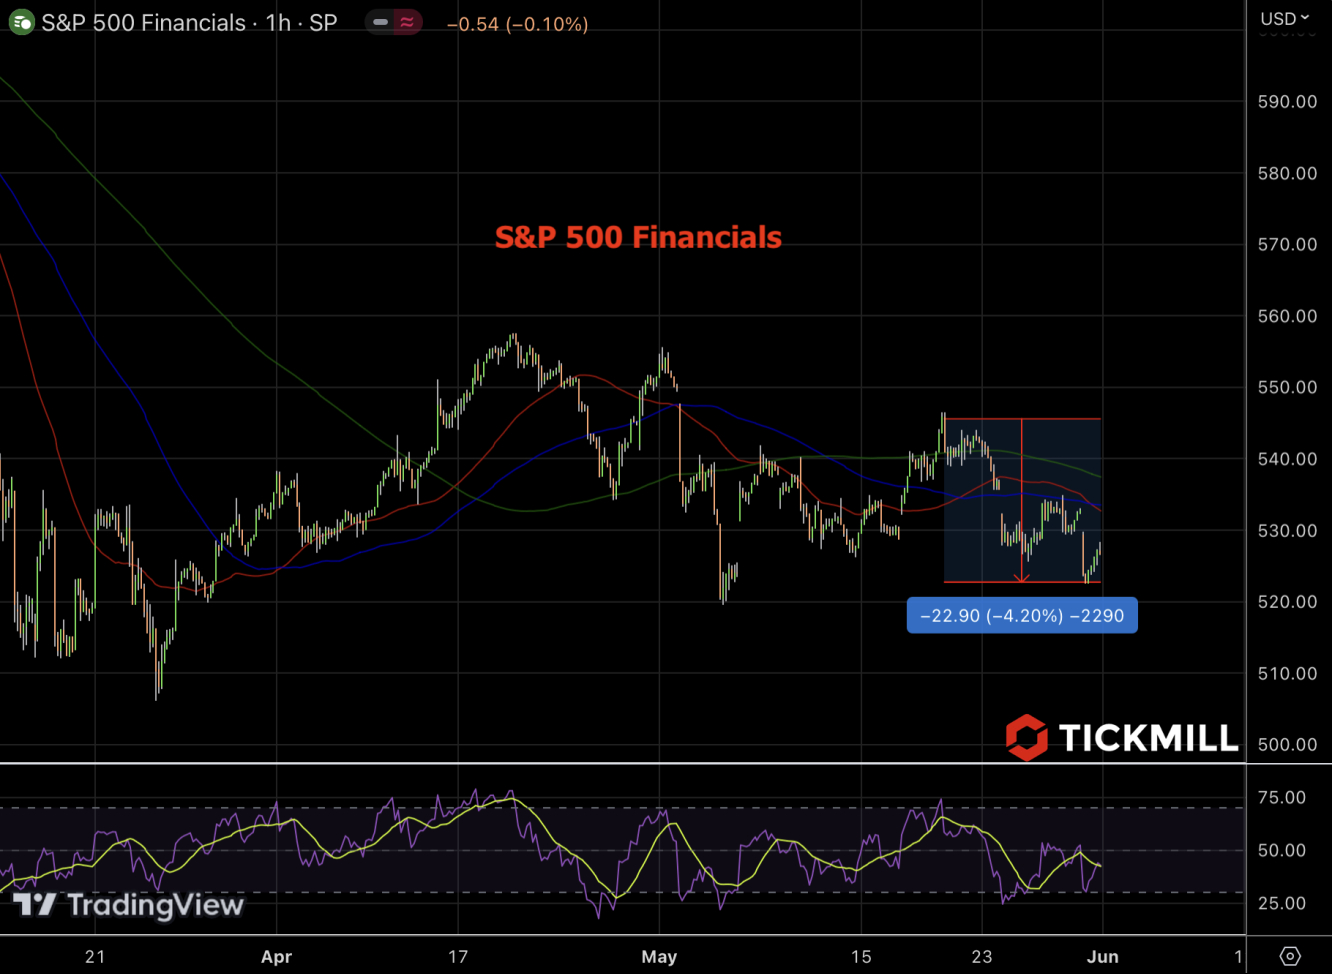 S&P 500 Financials